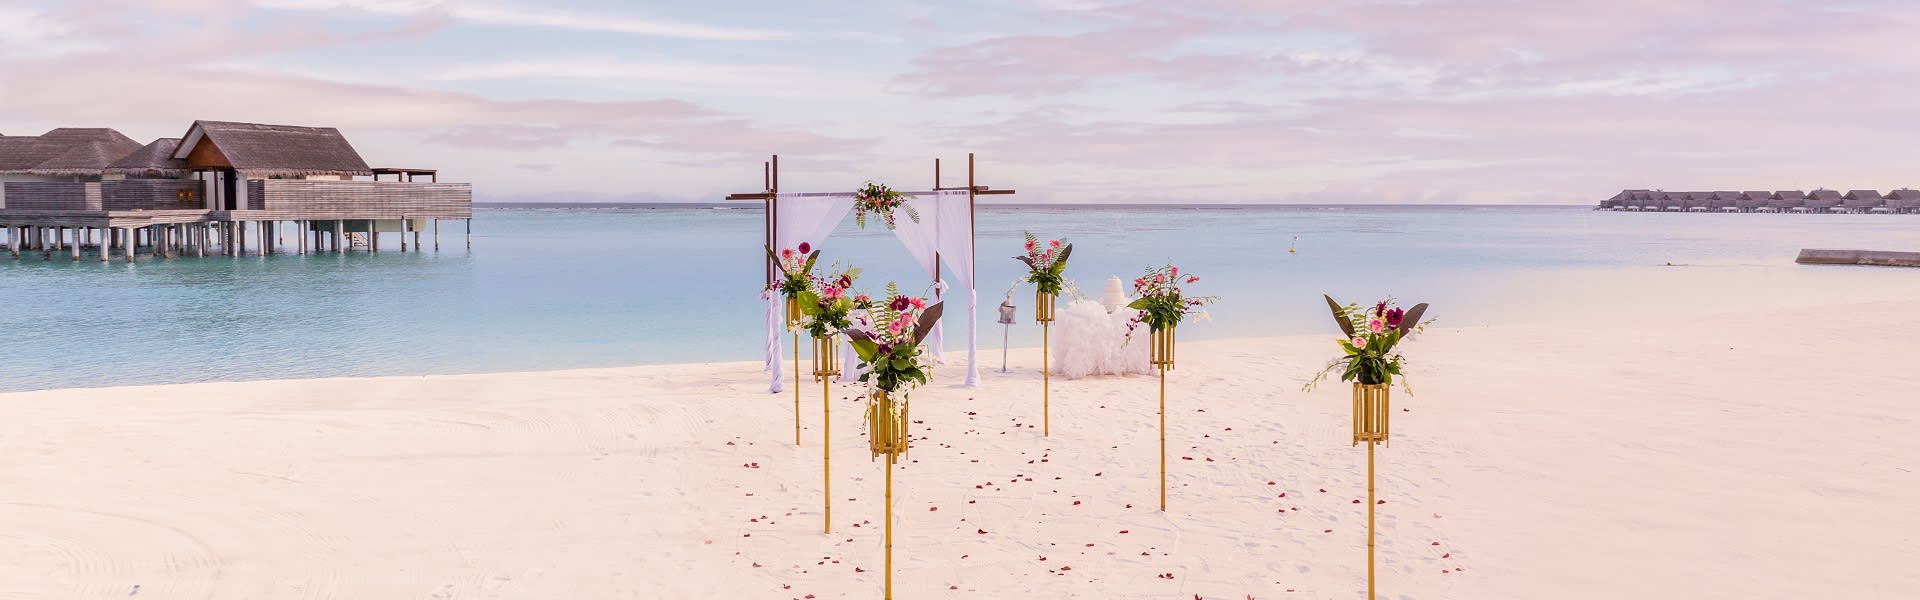 Intimate beach wedding ceremony at Niyama Private Islands Maldives